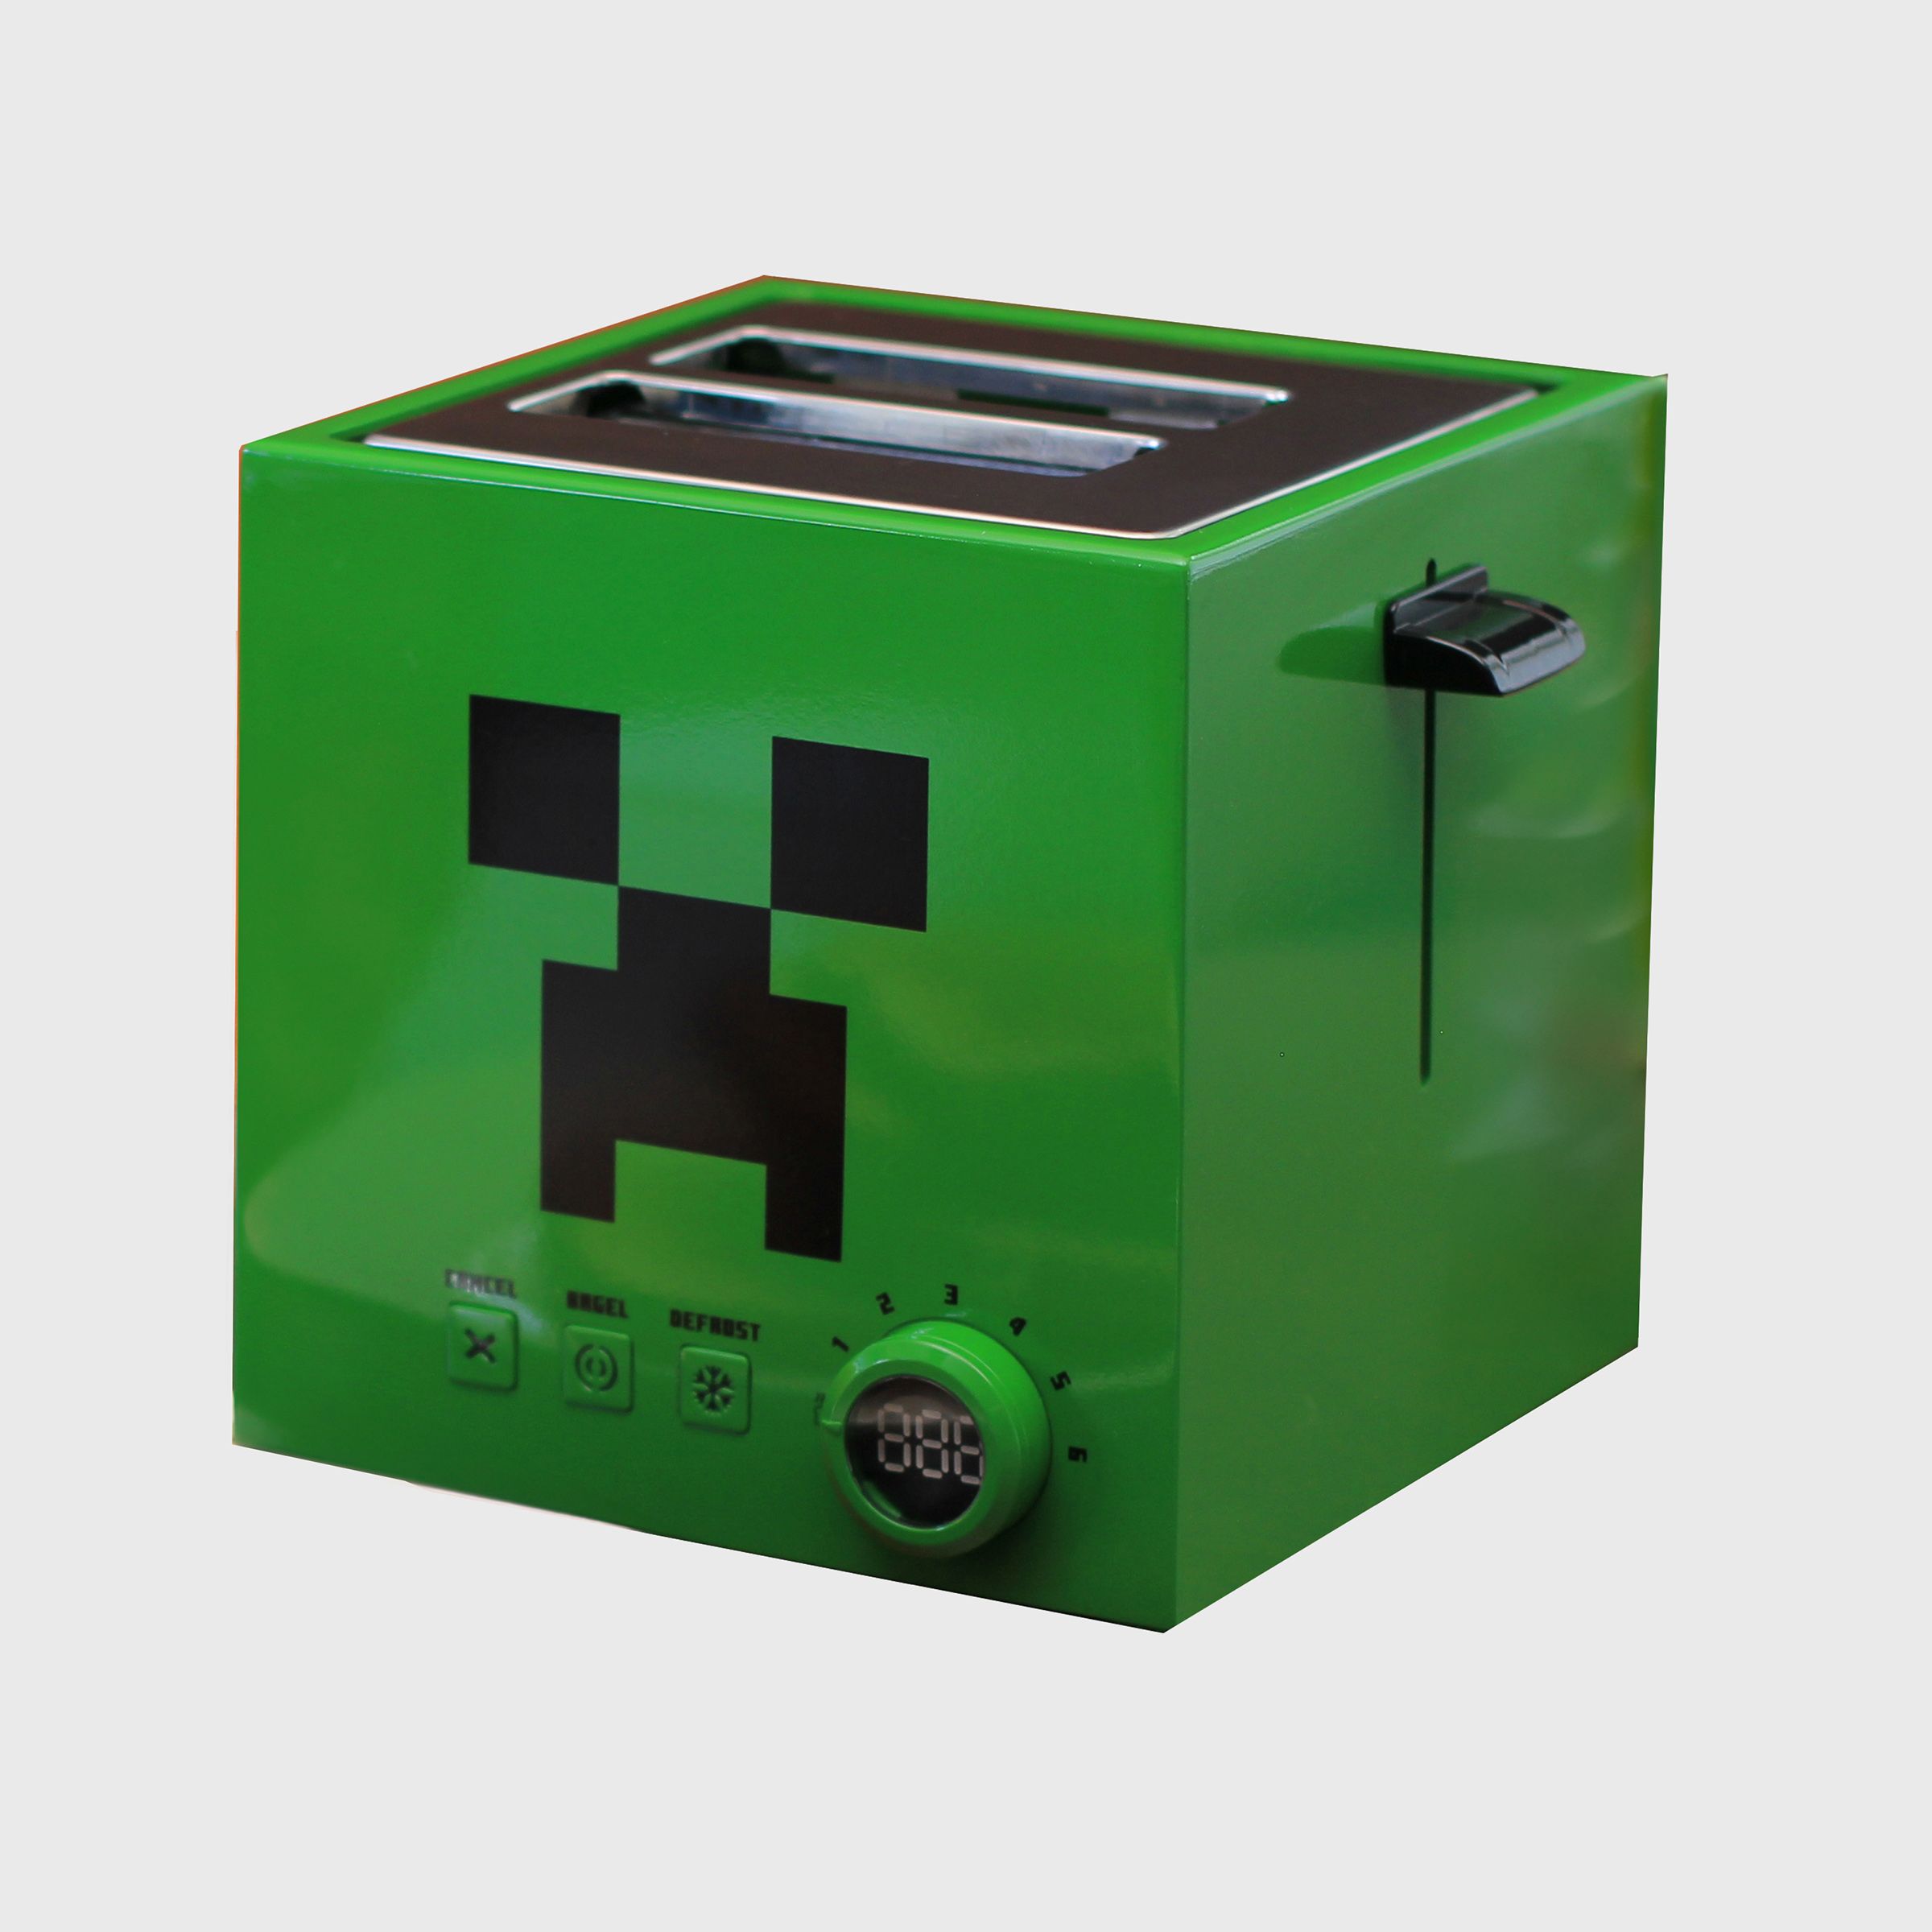 Ukonic | Toaster | Minecraft Creeper Square